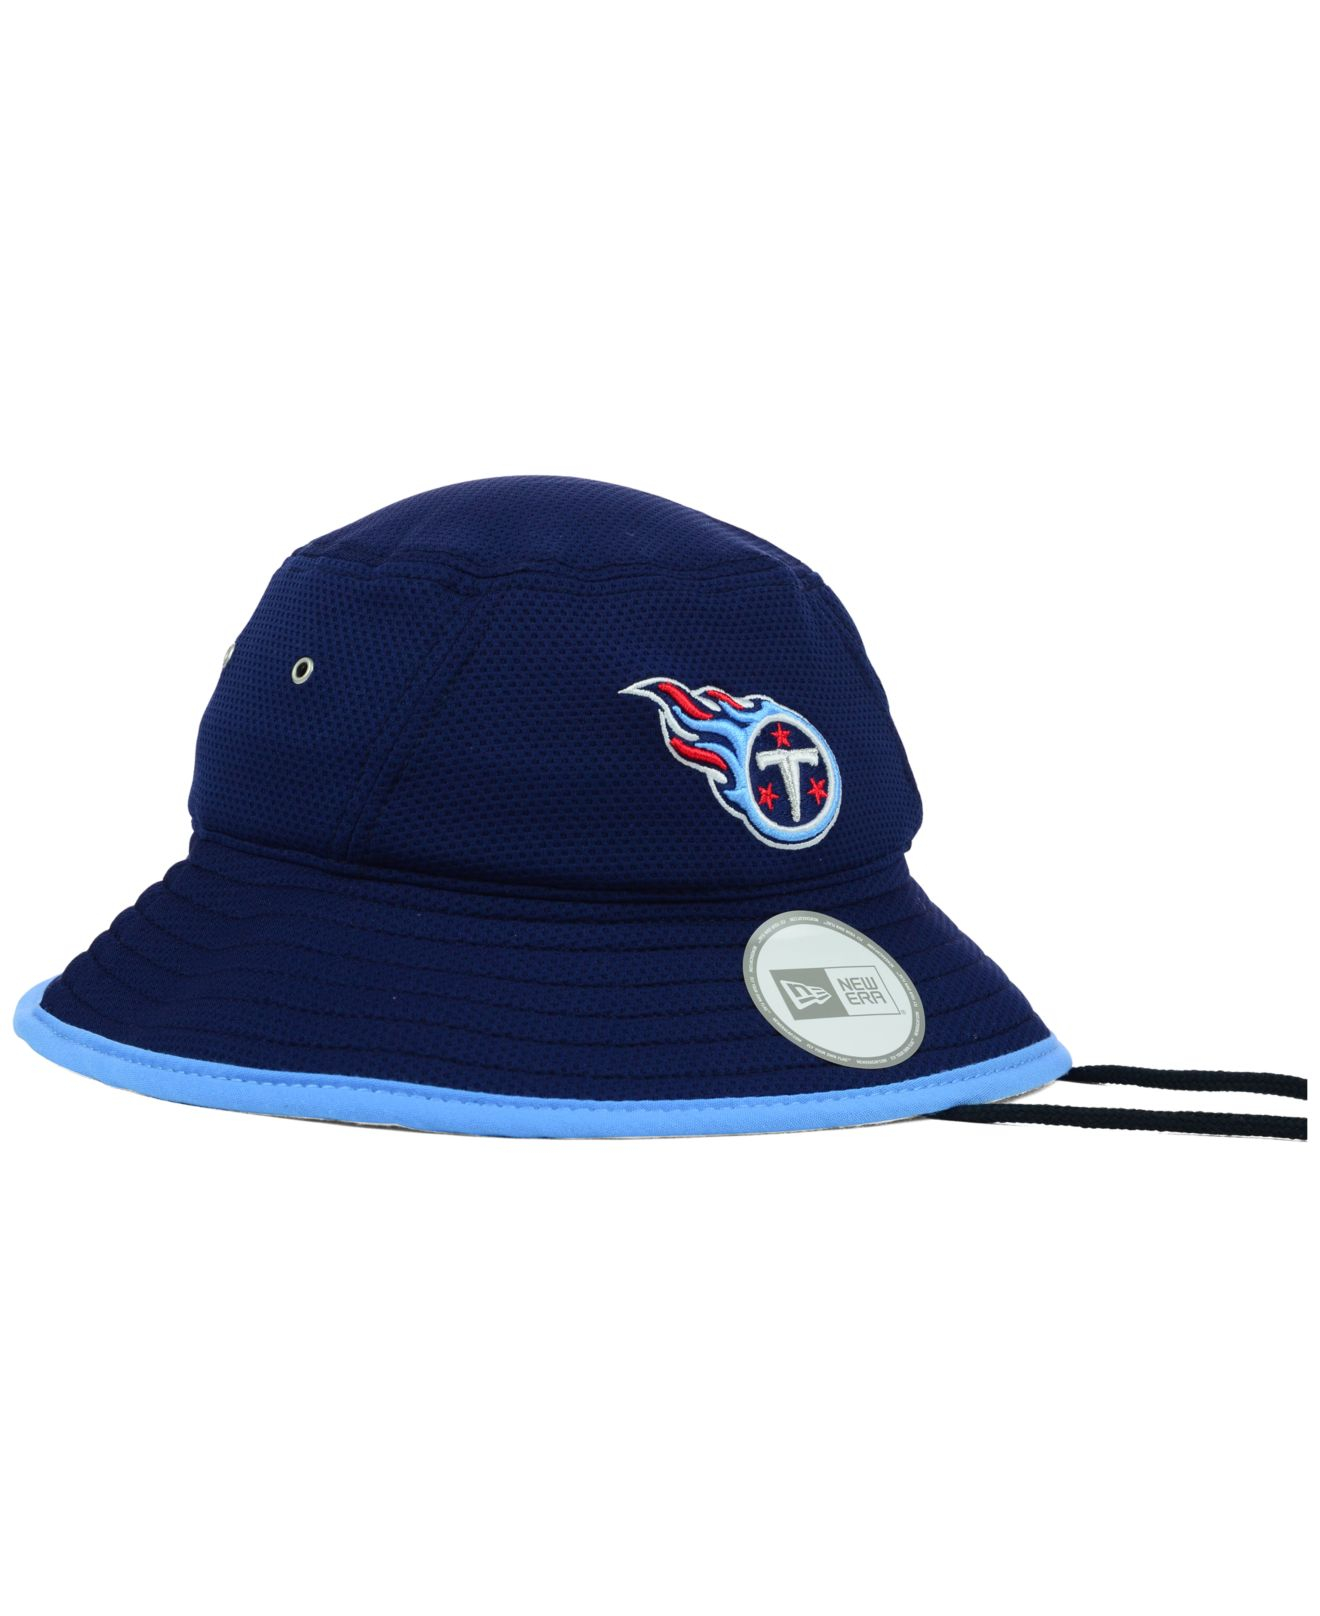 KTZ Tennessee Titans Tc Training Bucket Hat in Navy (Blue) for Men - Lyst